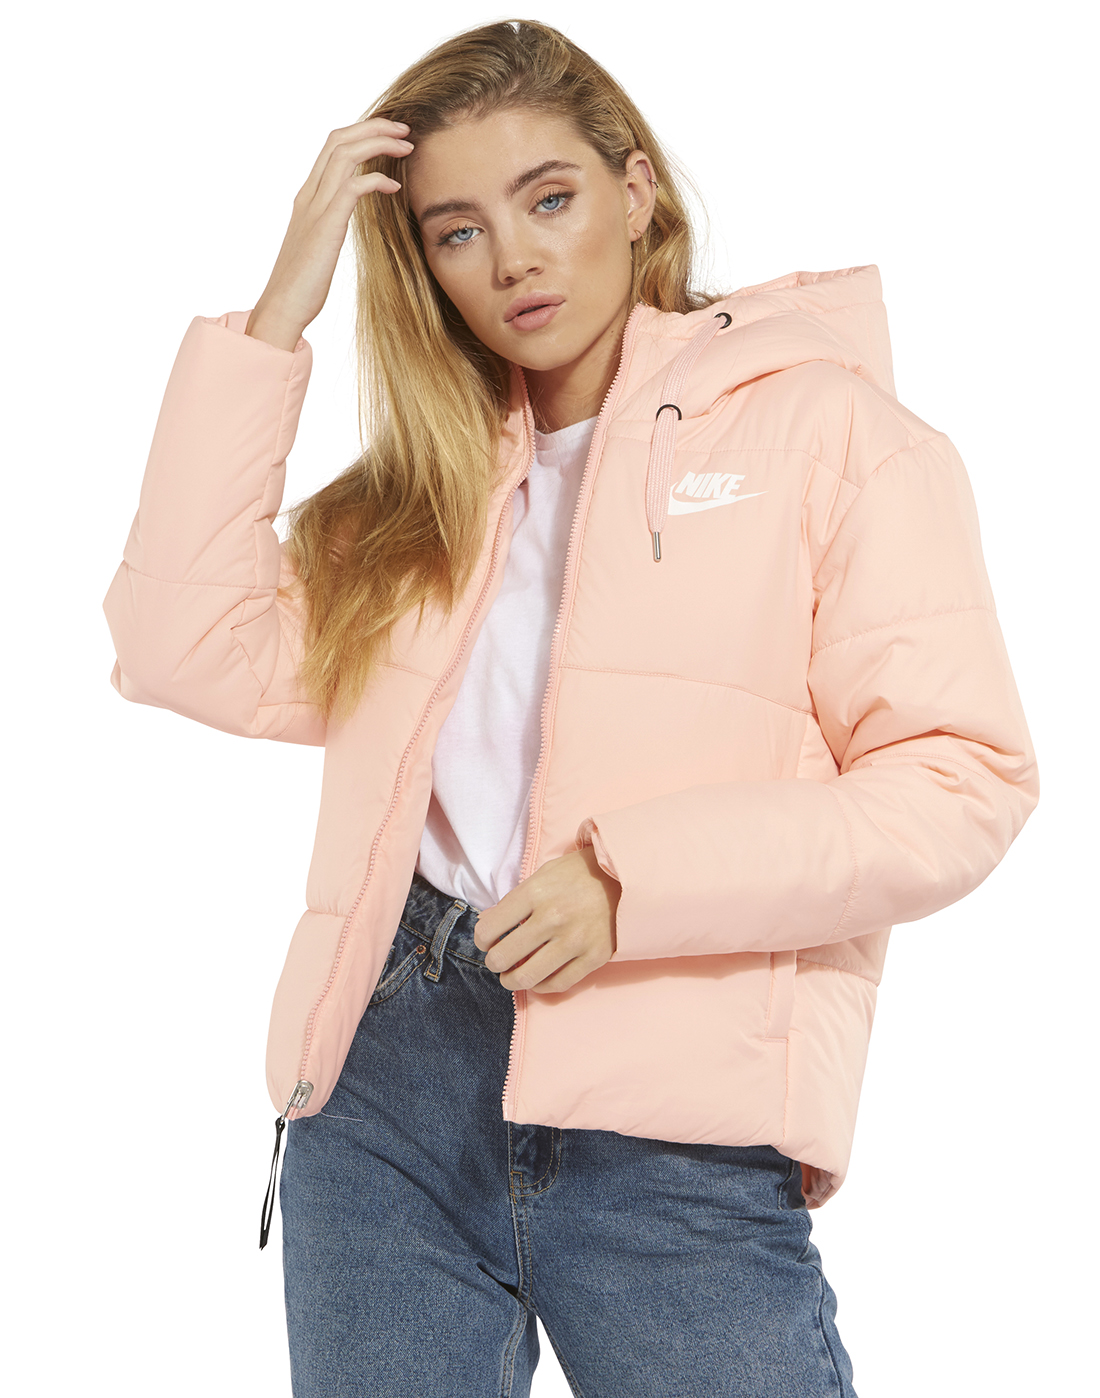 hot pink nike jacket